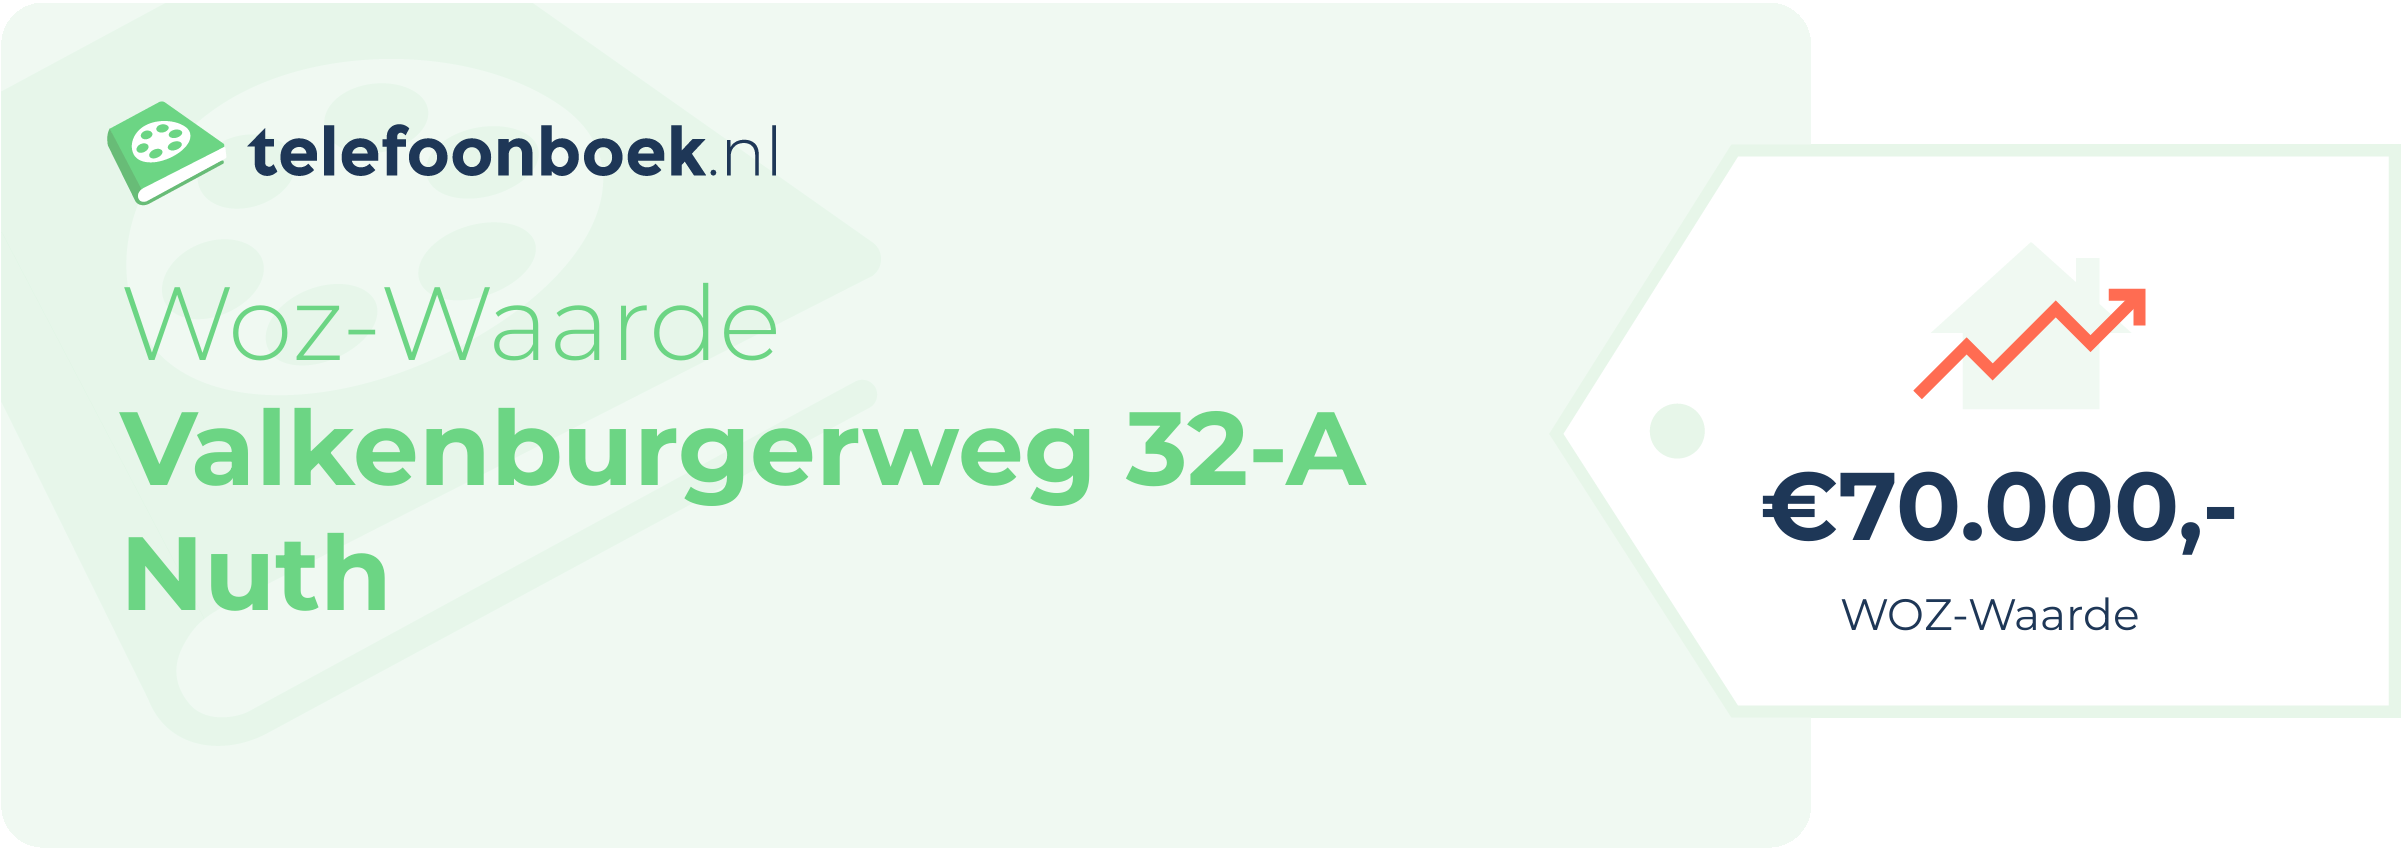 WOZ-waarde Valkenburgerweg 32-A Nuth